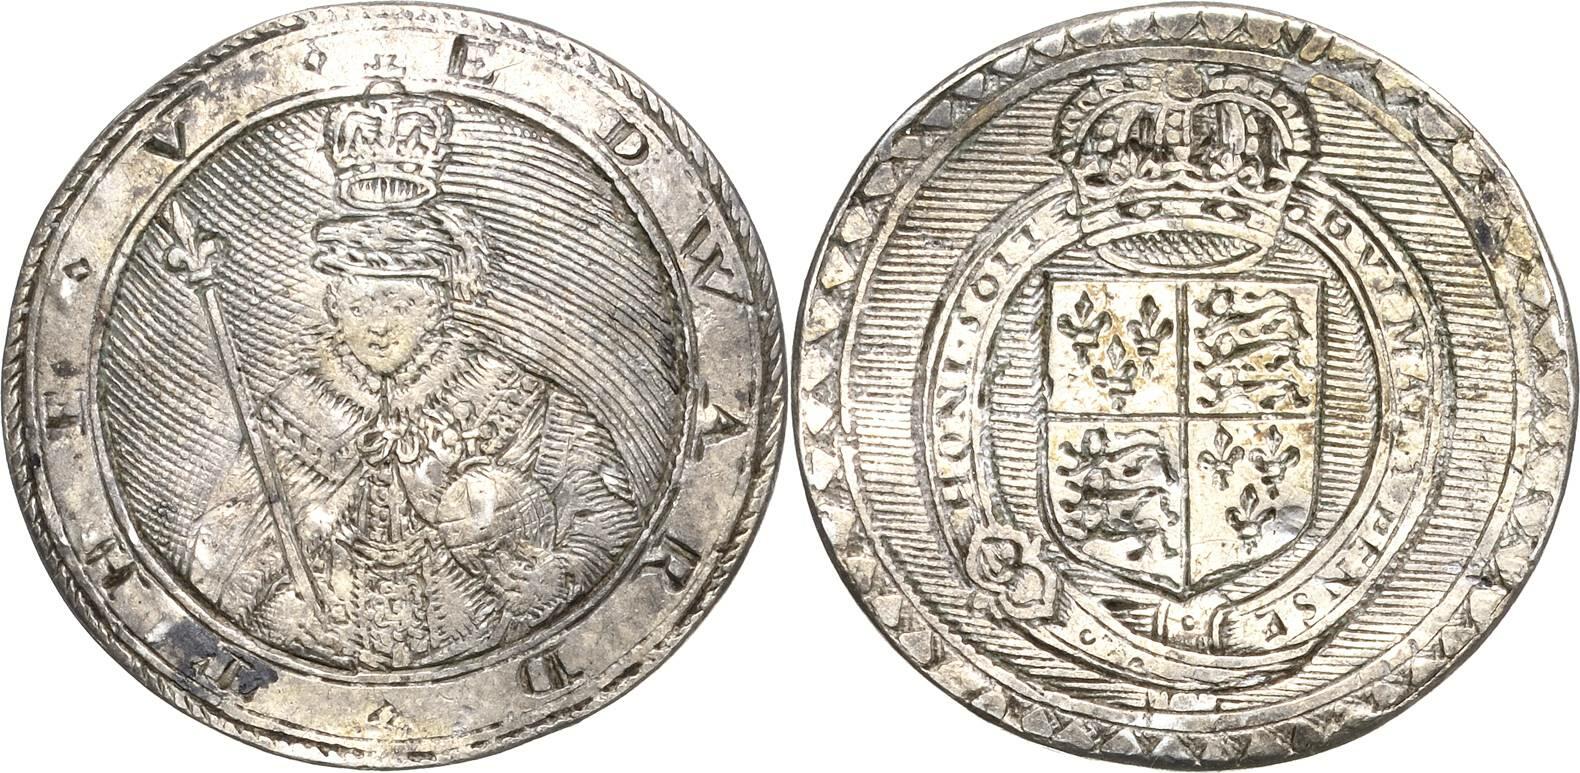 40.150.210: Europe - Royaume Uni - Édouard v, 1483